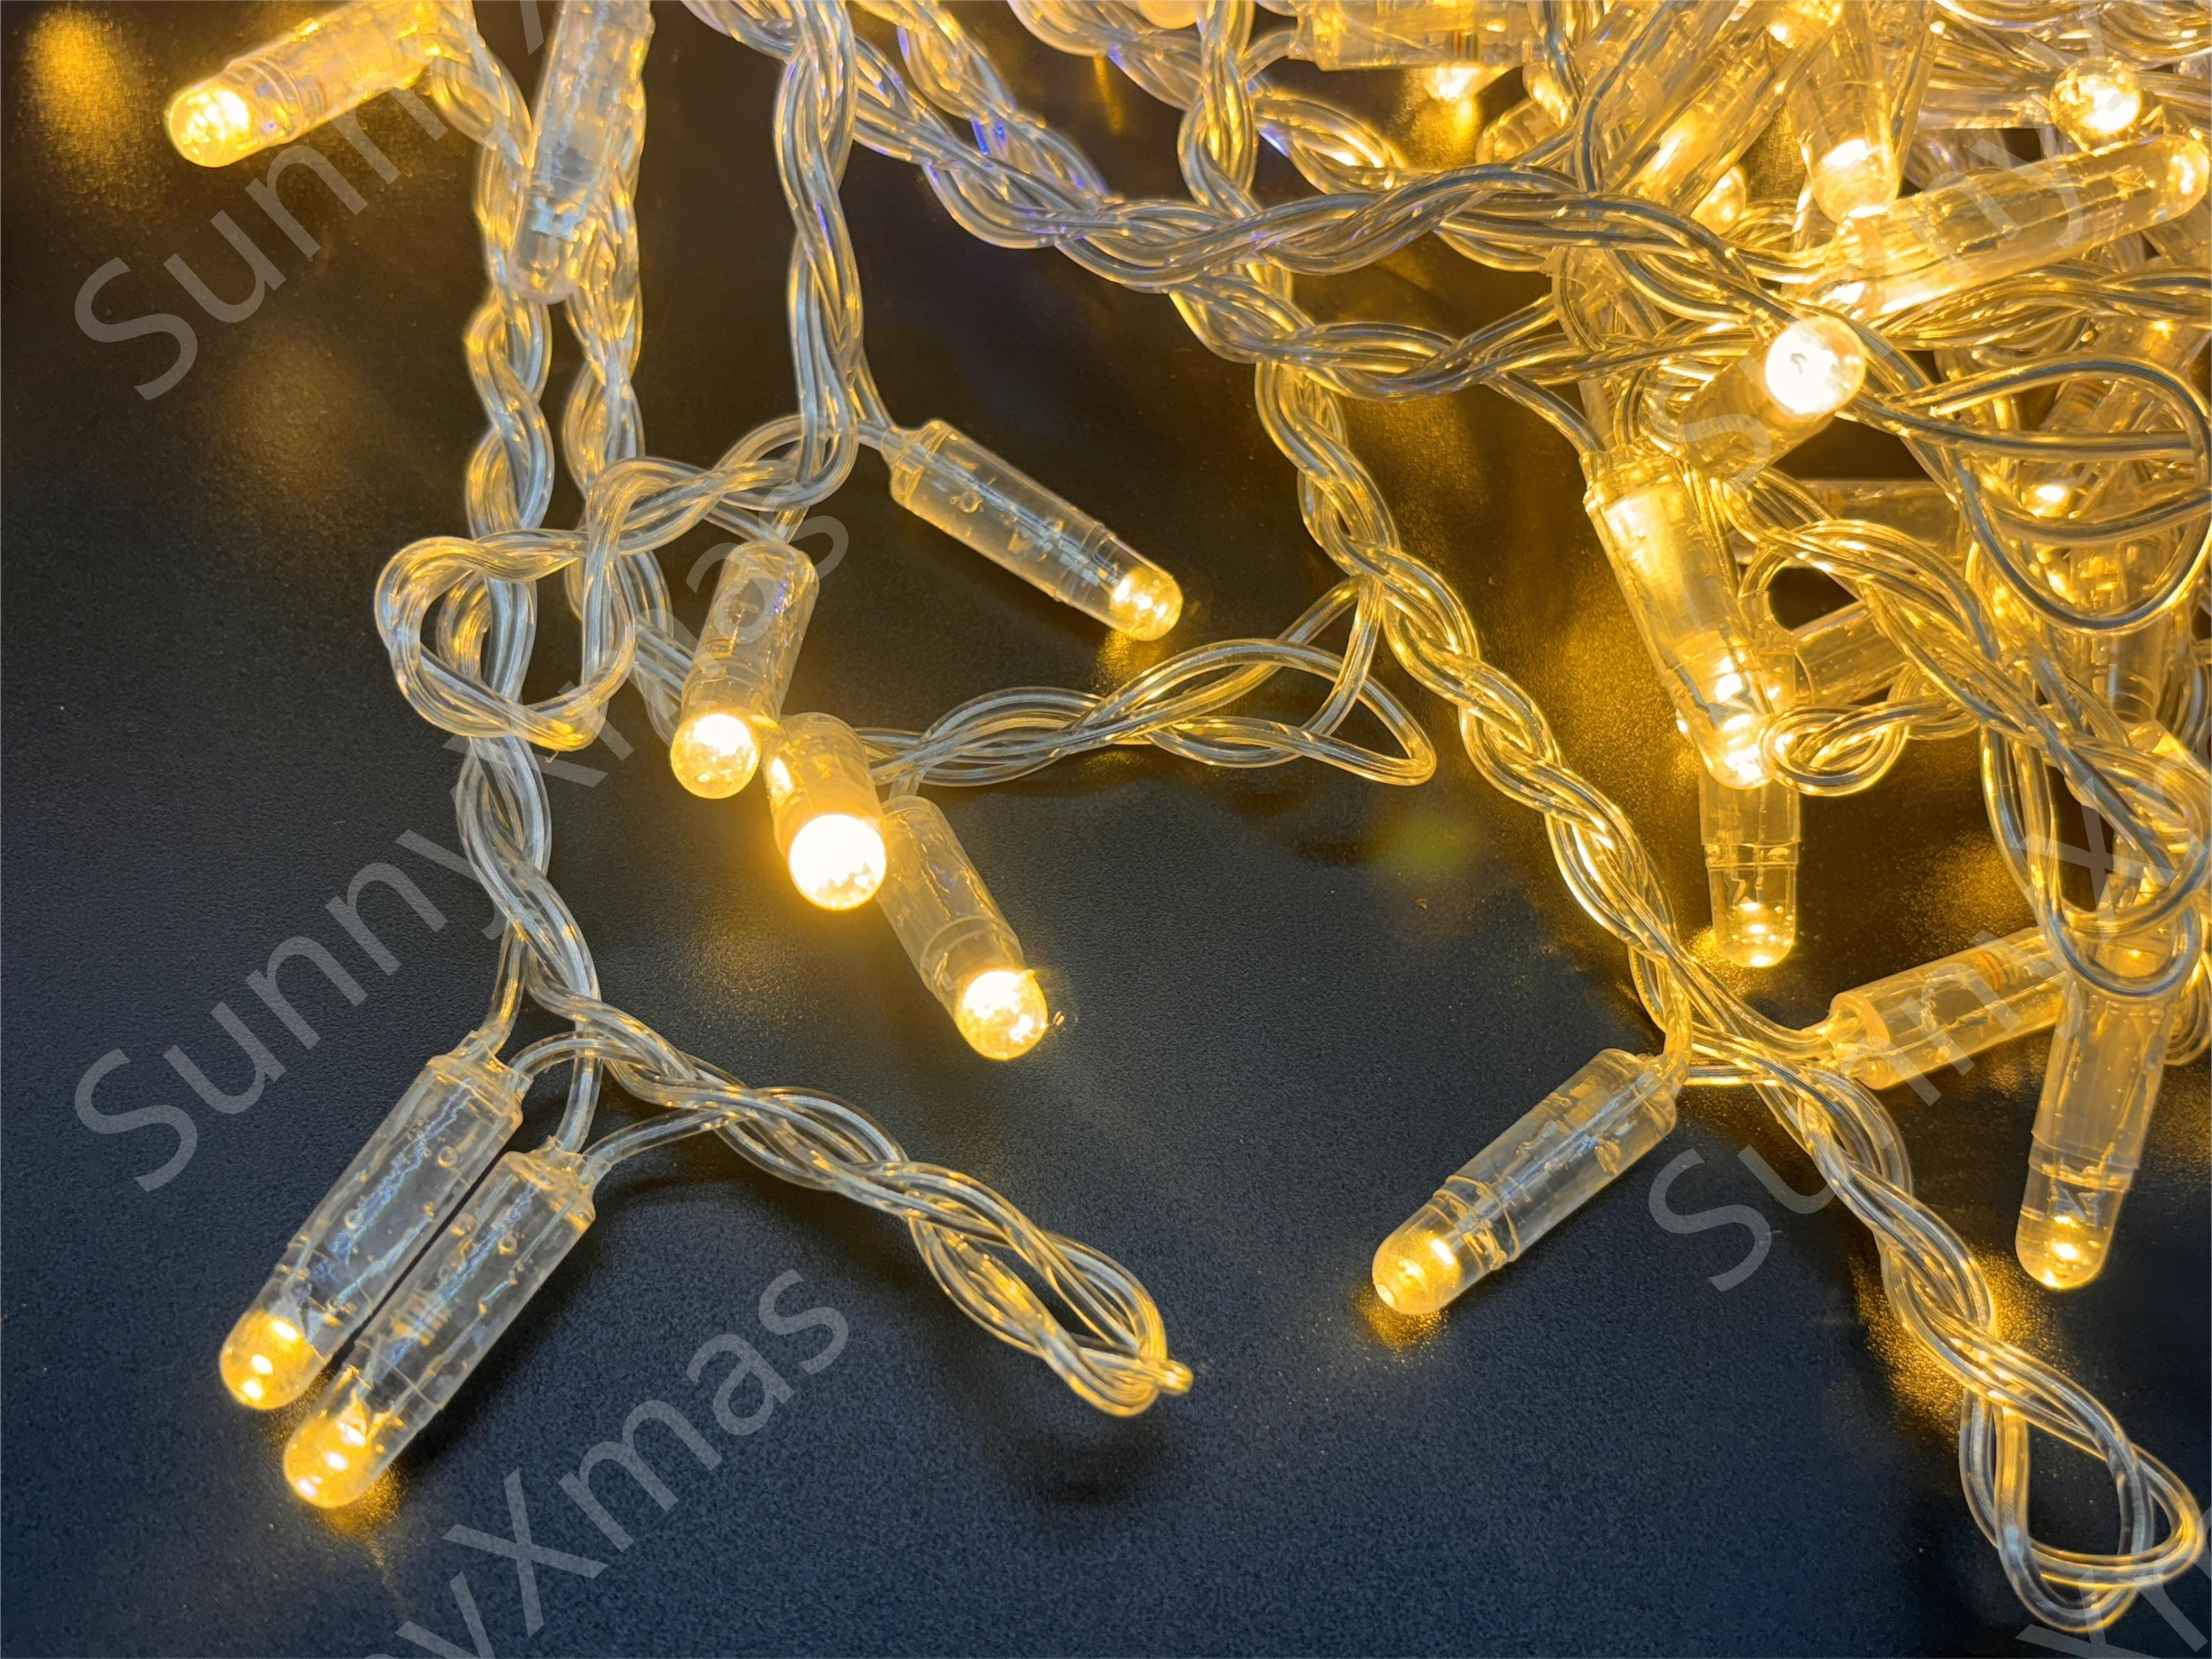 LED Light String 12M×0.6M 240L Warm White IP65